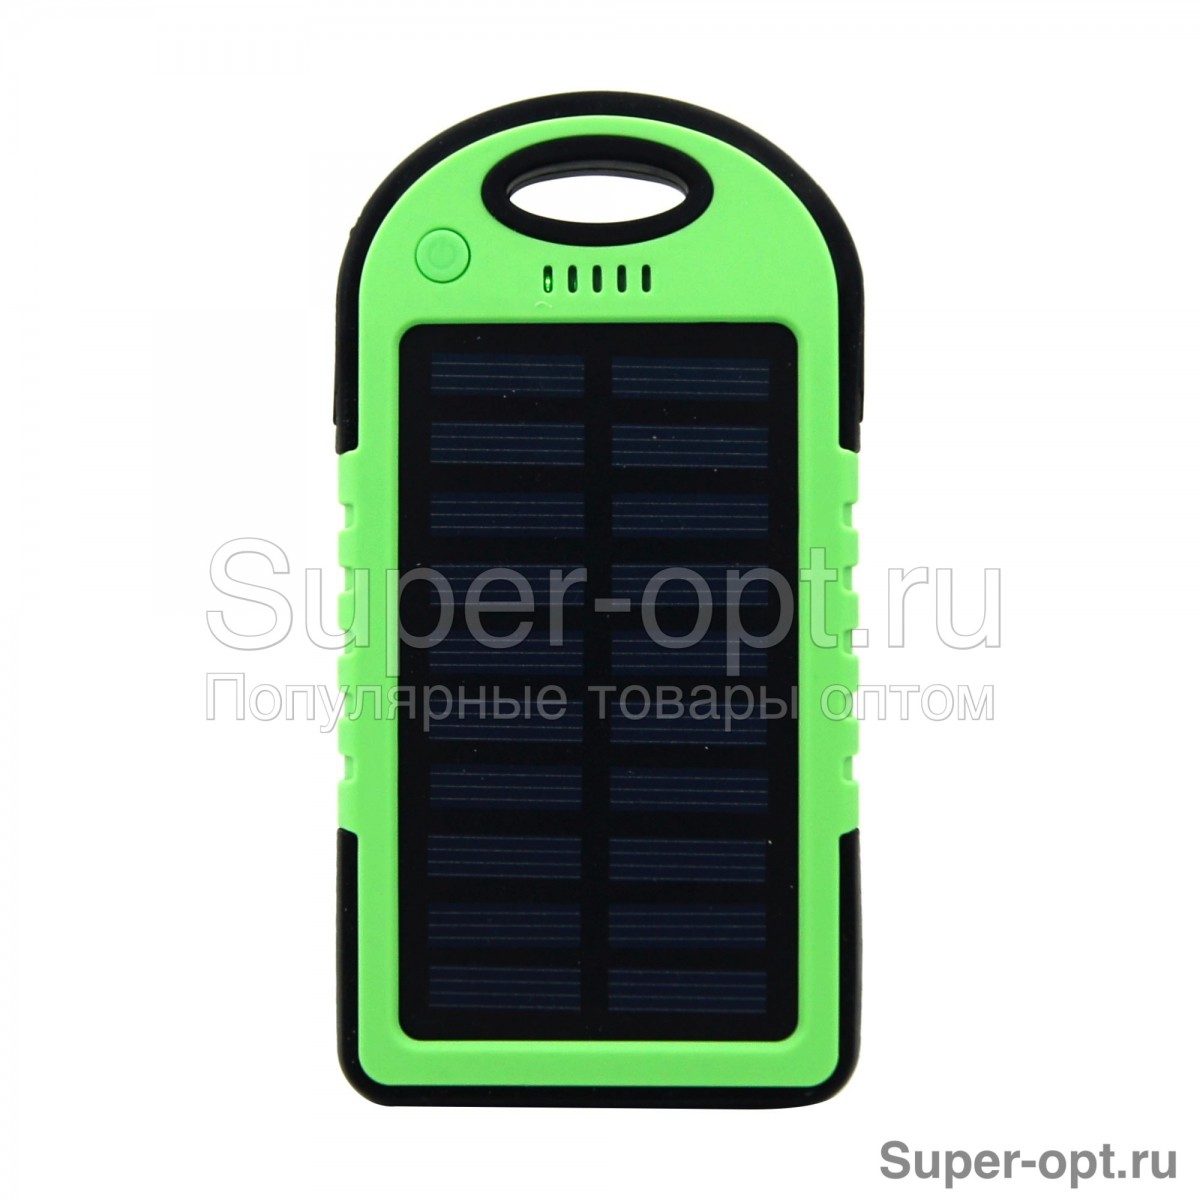 Power Bank на солнечных батареях Solar Charger 5000 mAh